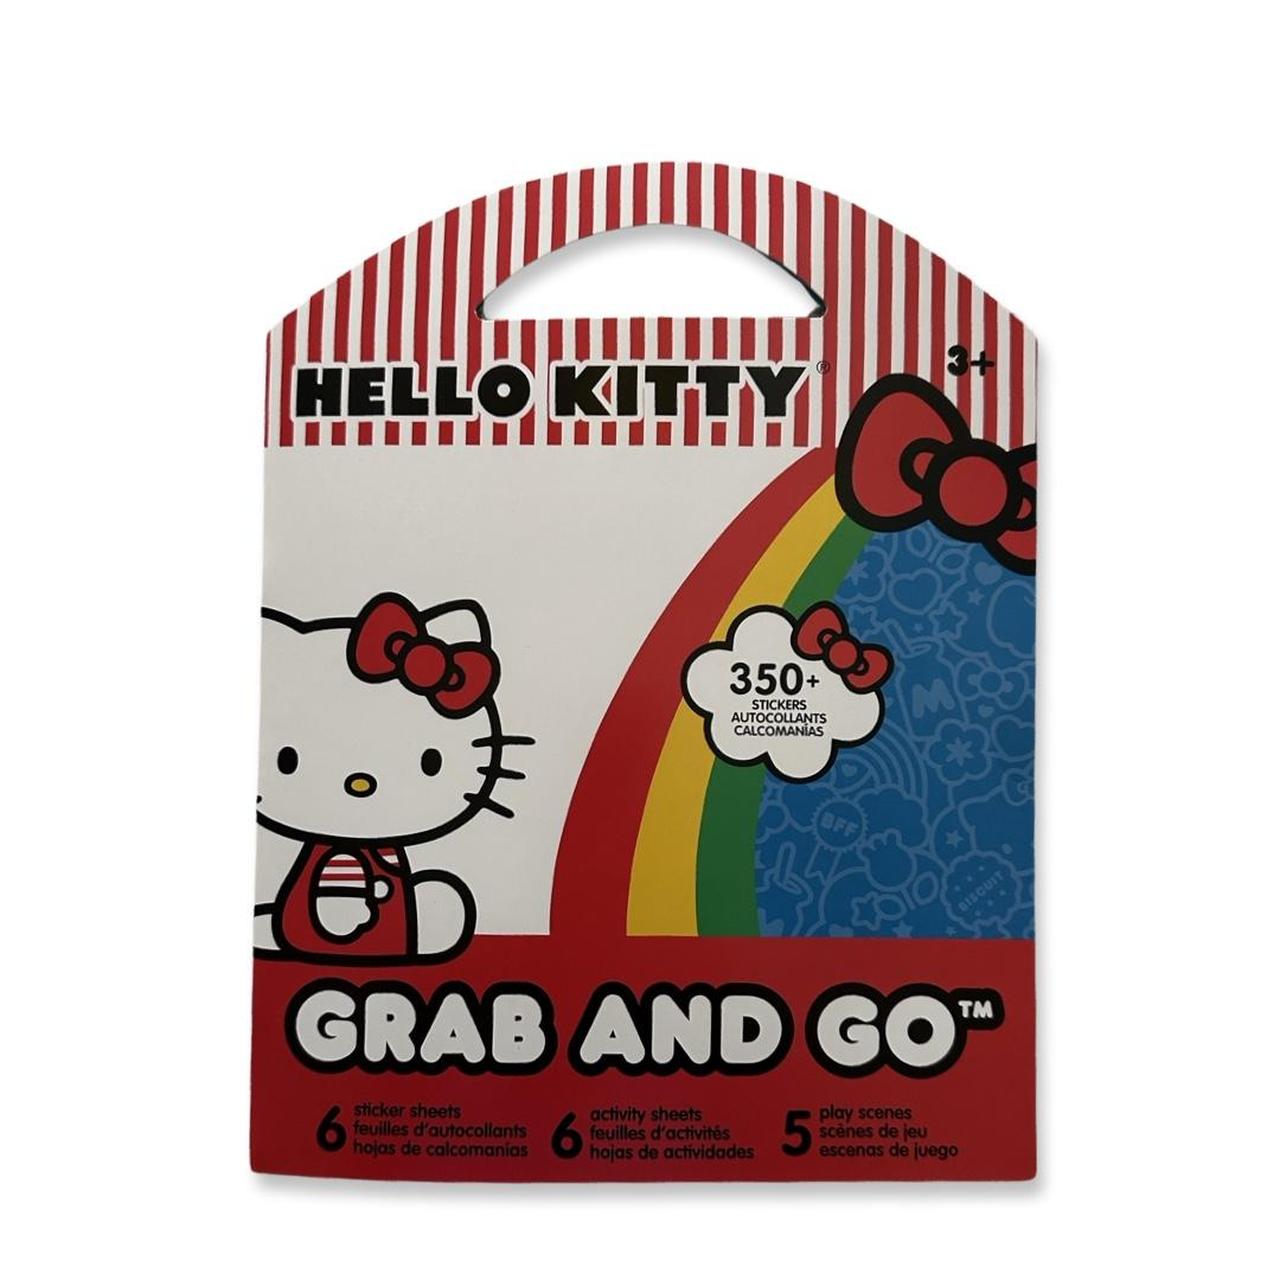 Hello Kitty Sticker Book Treasury, USED Over 350 Stickers Sanrio